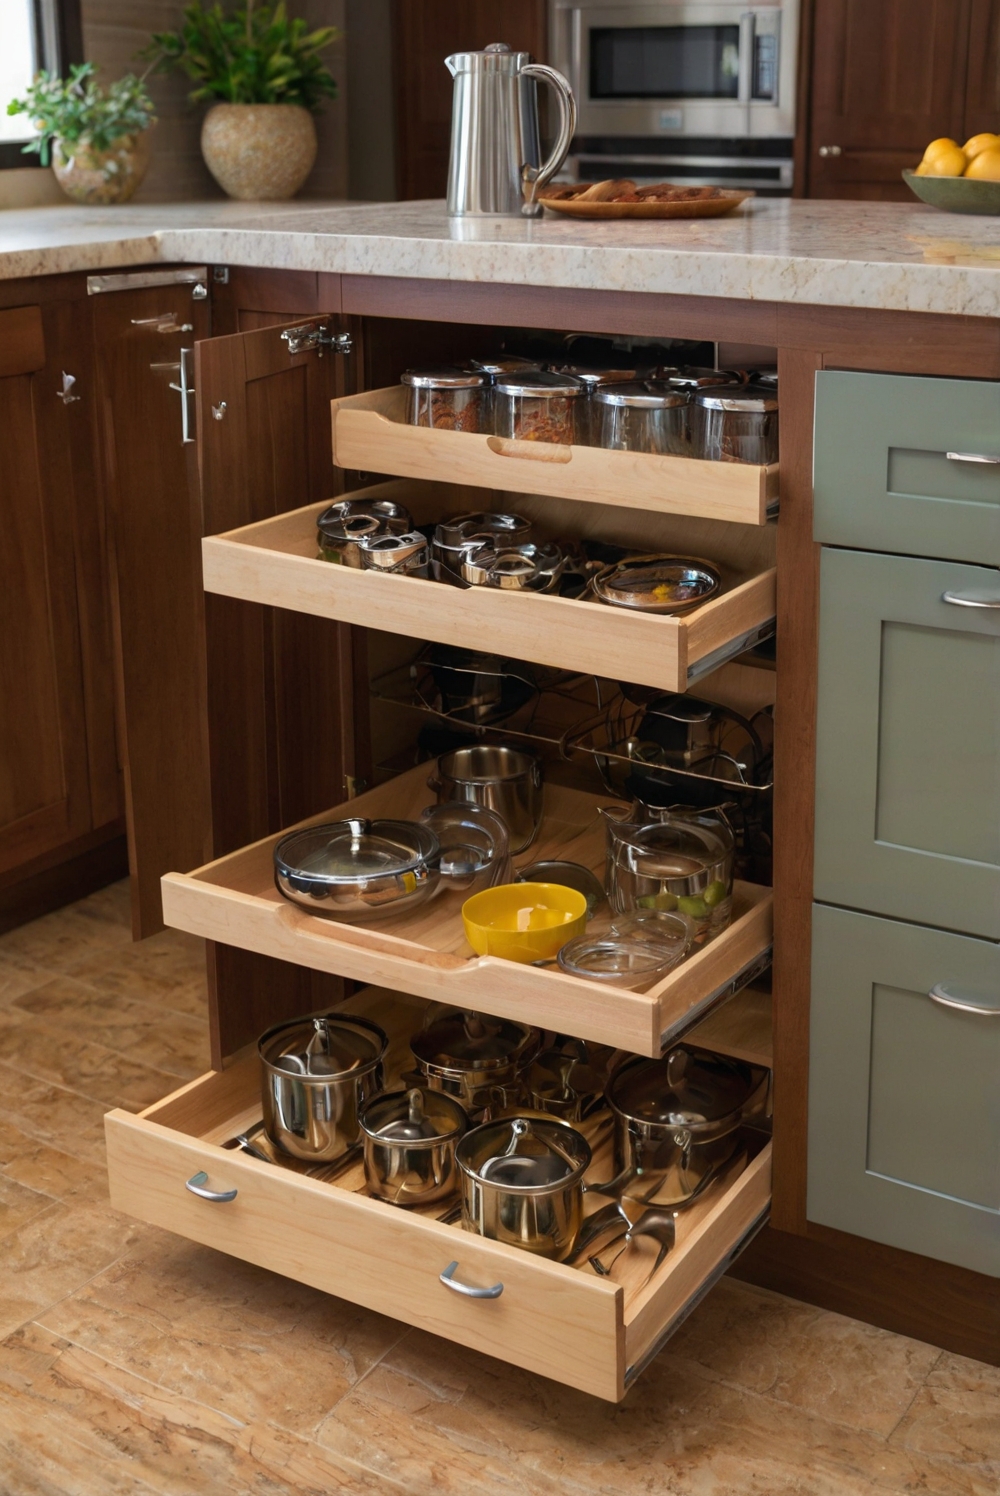 Kitchen organization, cabinet storage, space-saving solutions, pantry organization, maximizing kitchen space, kitchen decluttering, cabinet organizers